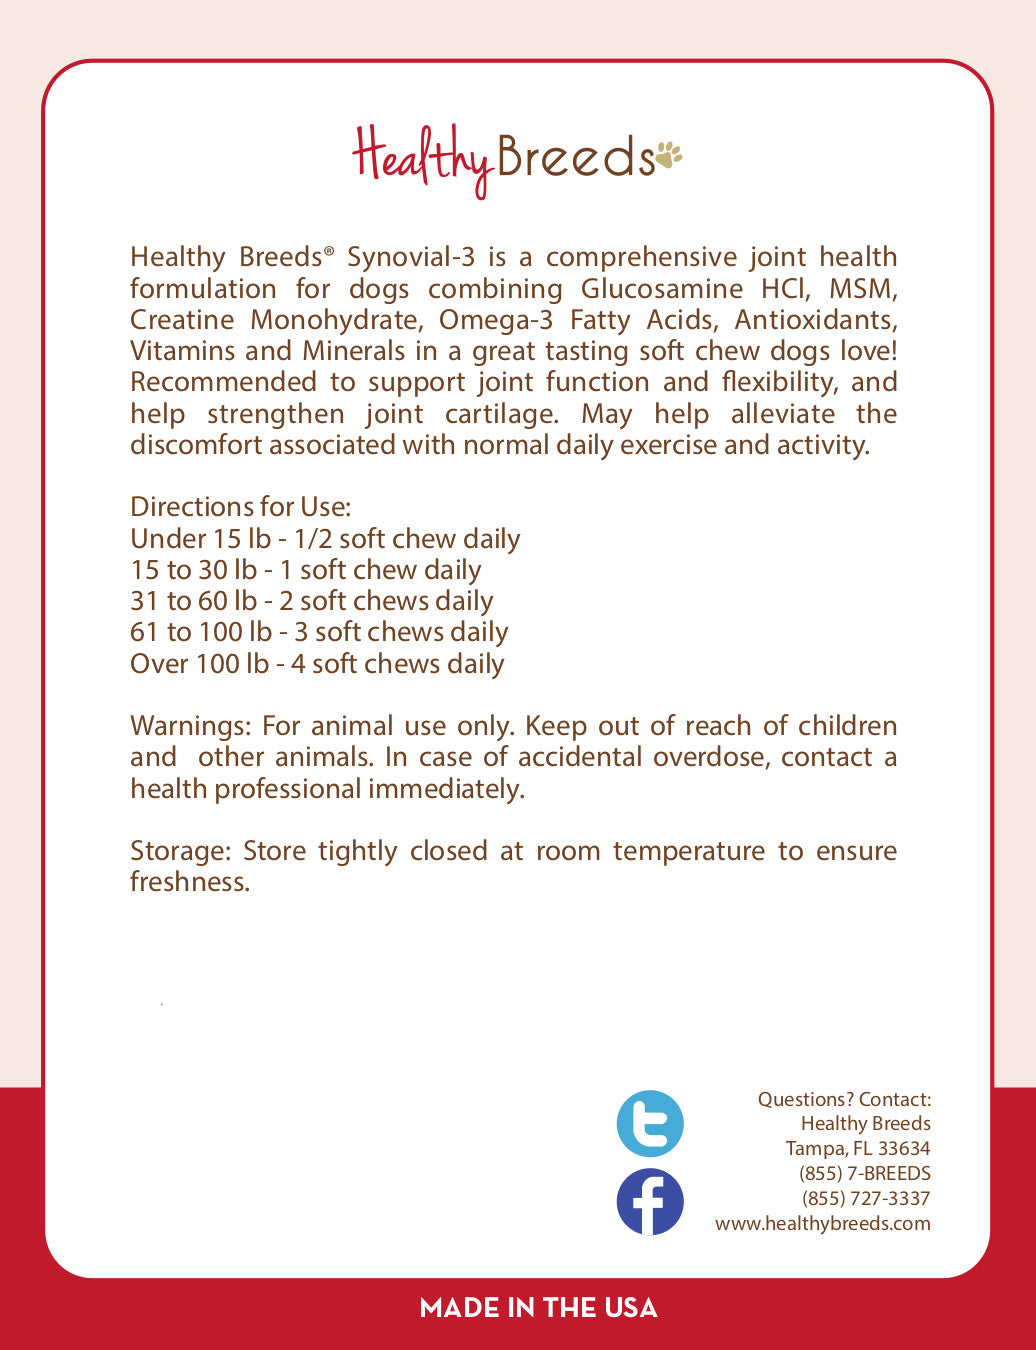 Australian Shepherd Synovial-3 Joint Health Formulation Soft Chews 240 Count